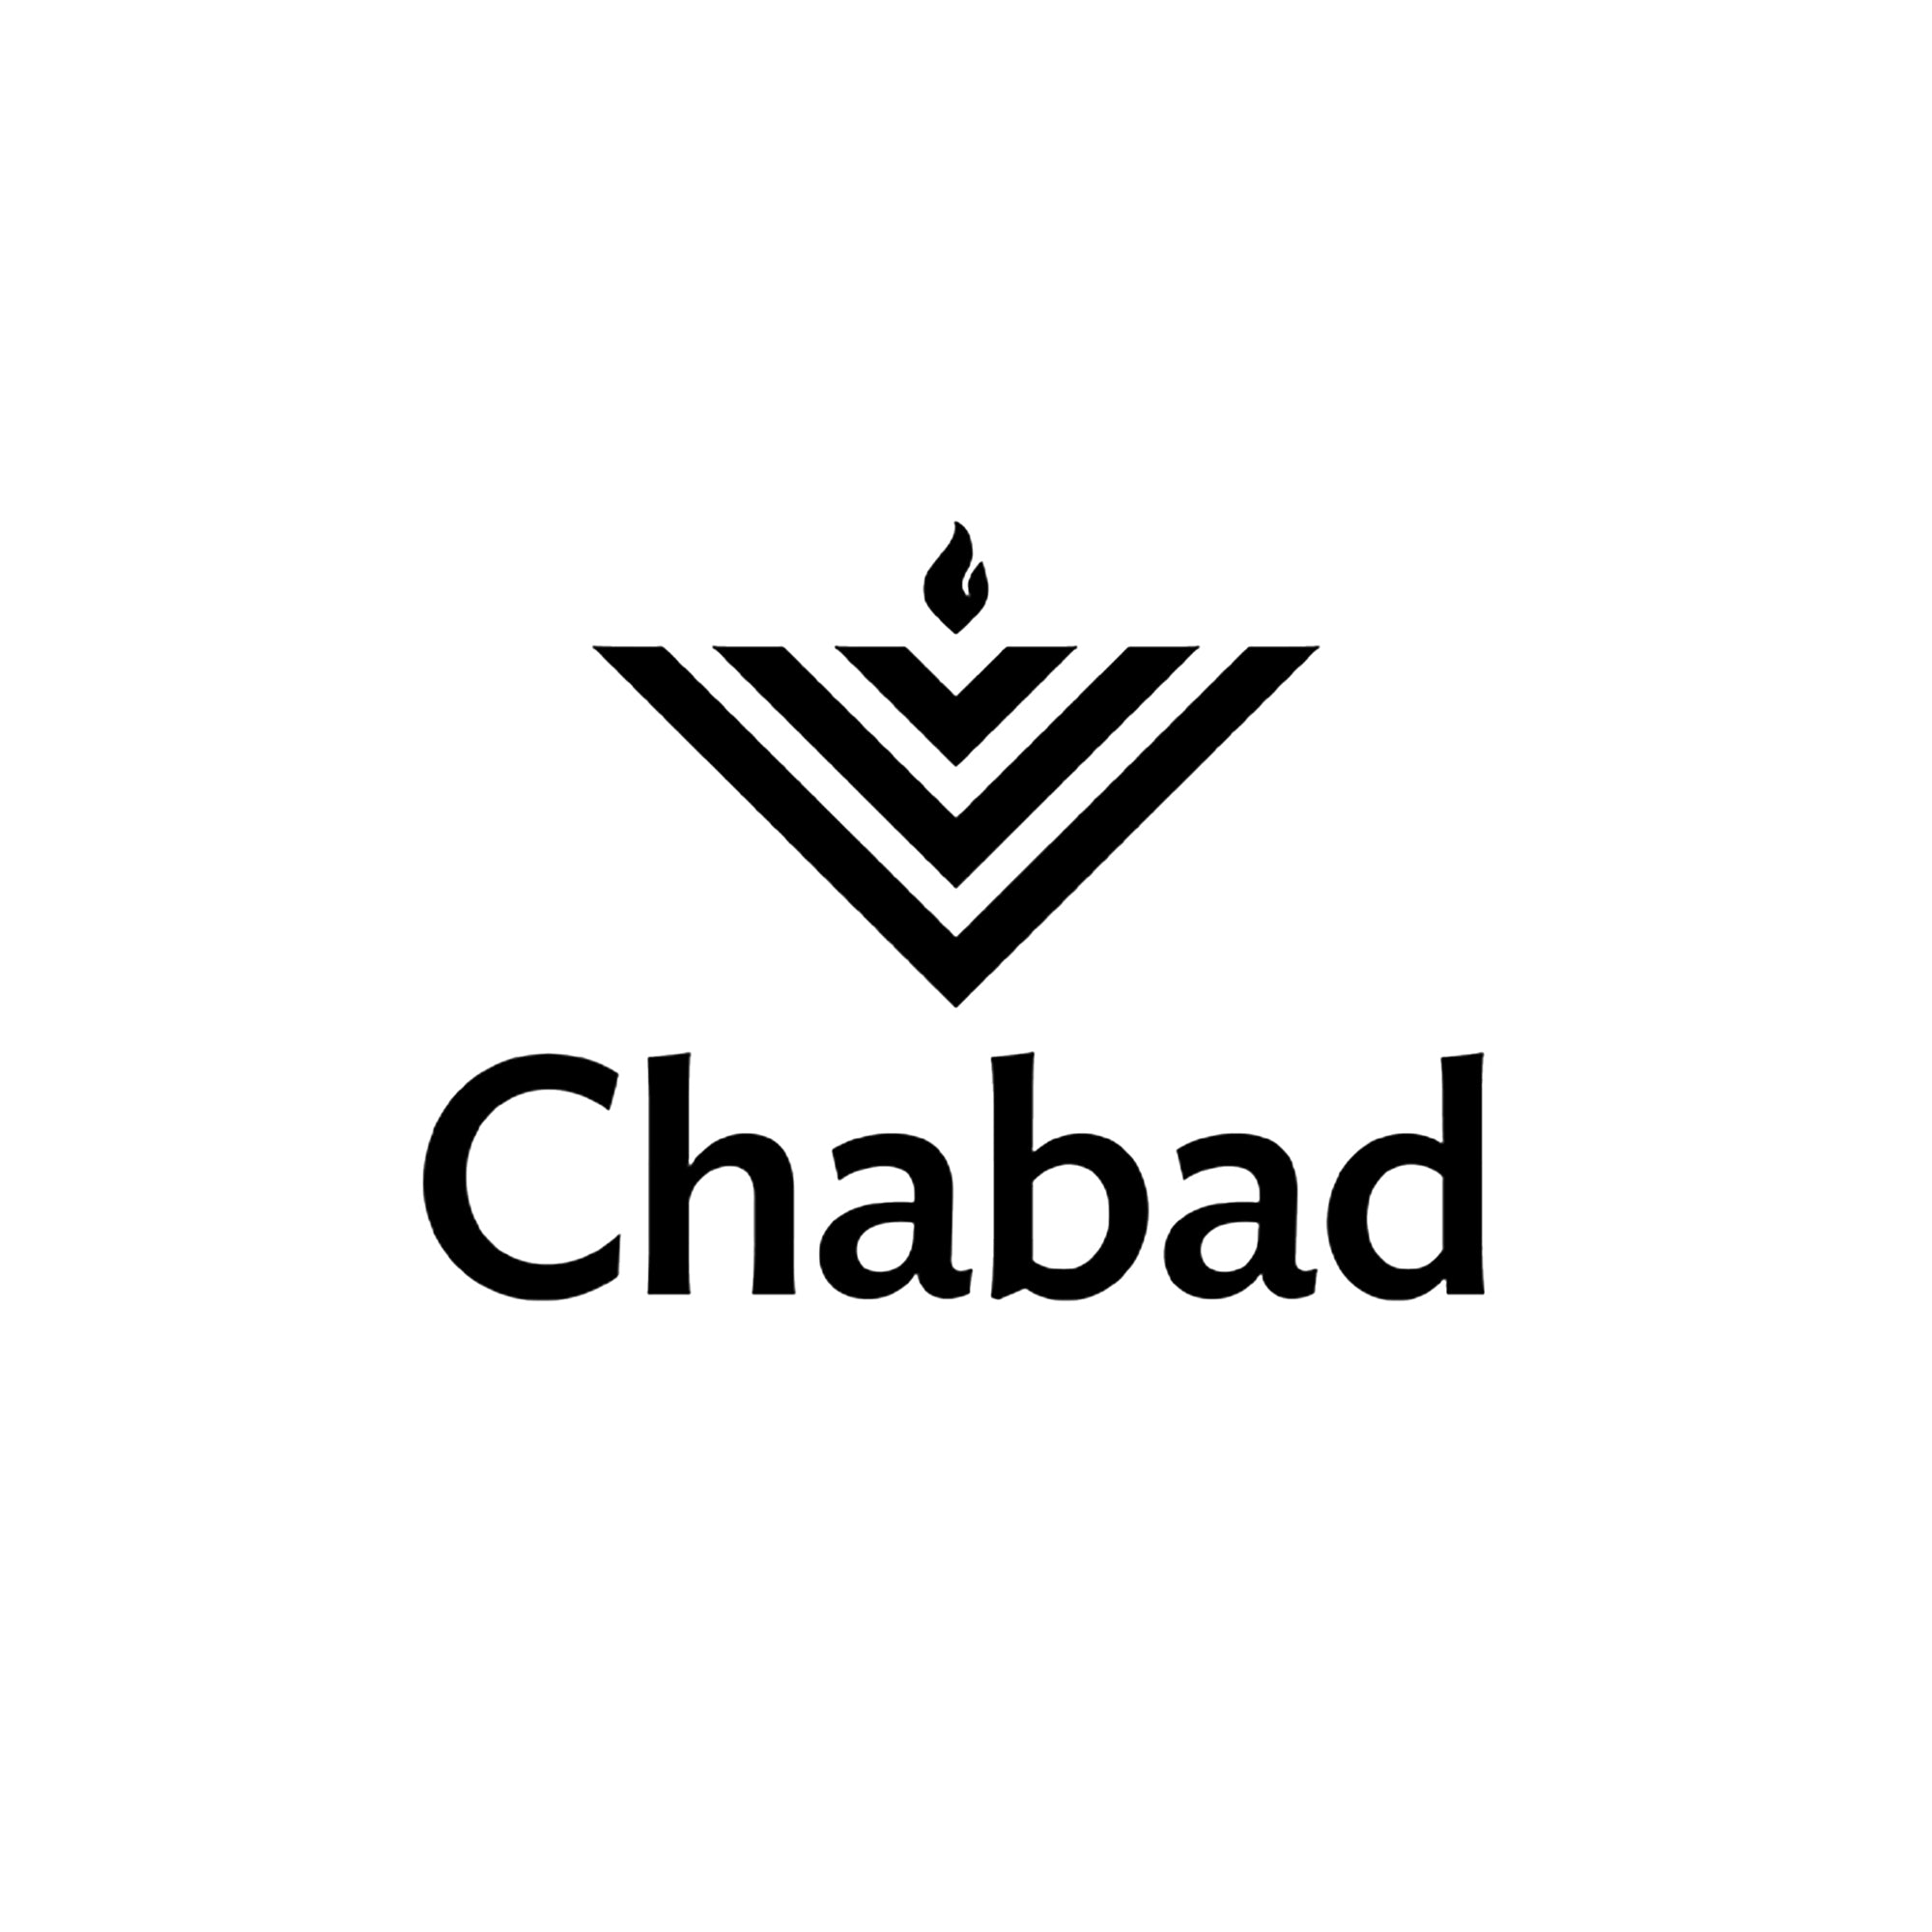  Chabad Logo